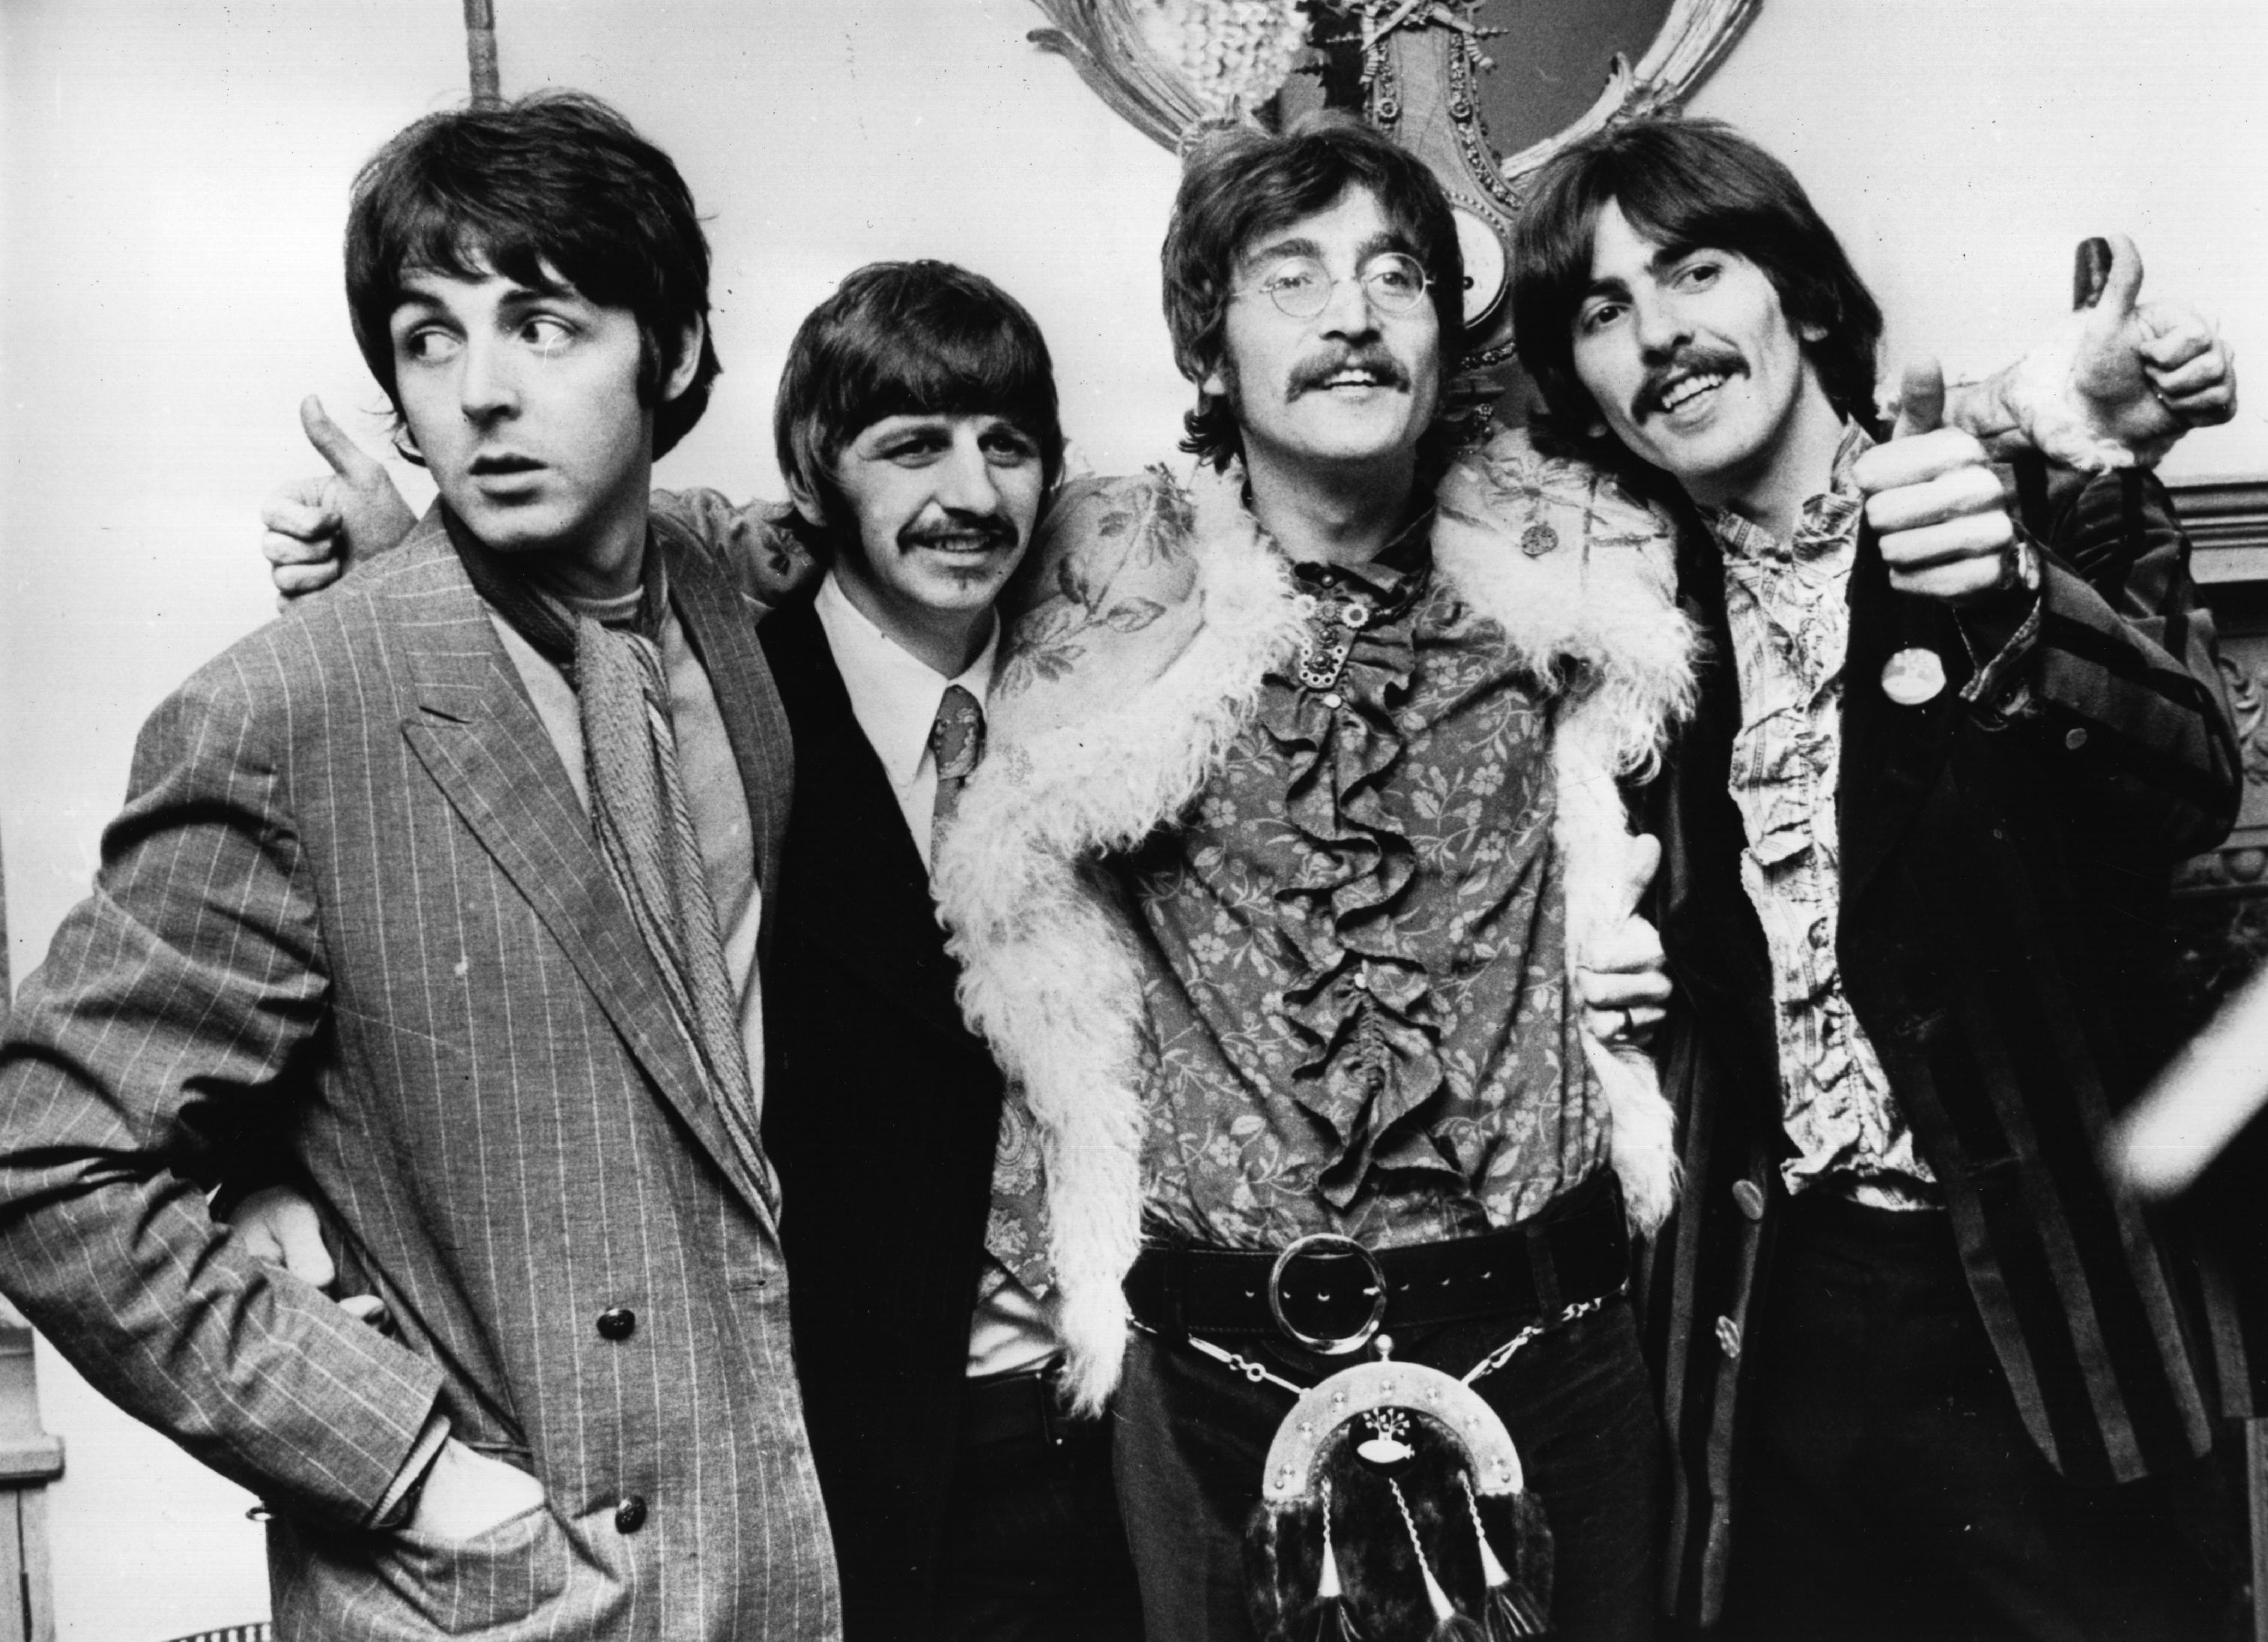 The Beatles' Paul McCartney, Ringo Starr, John Lennon, and George Harrison in a row